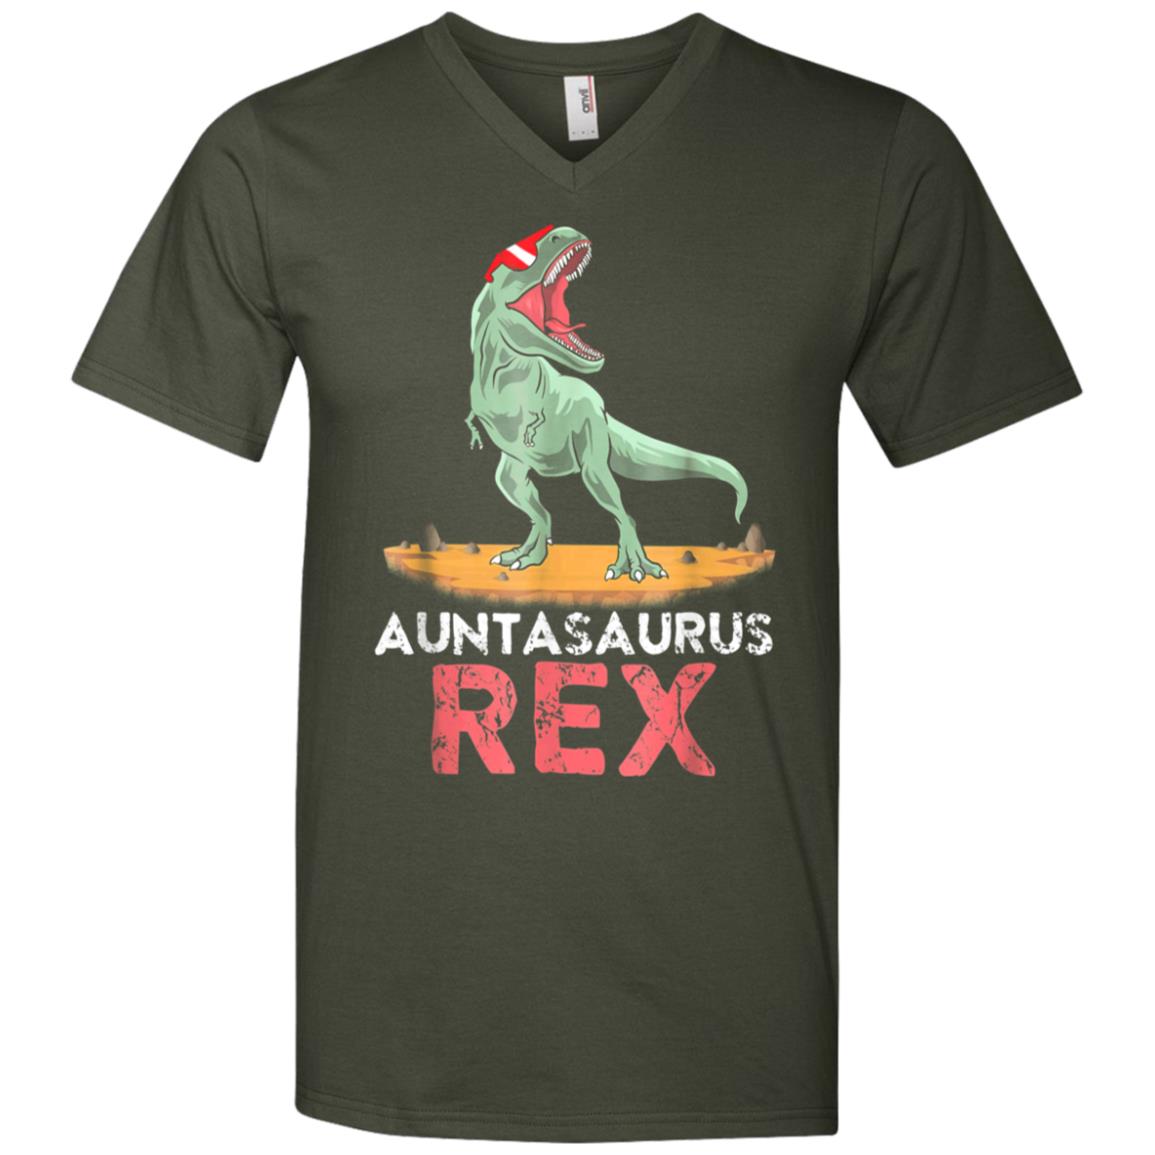 Auntasaurus Rex Aunt A Saurus Rex Family Dino T Shirt